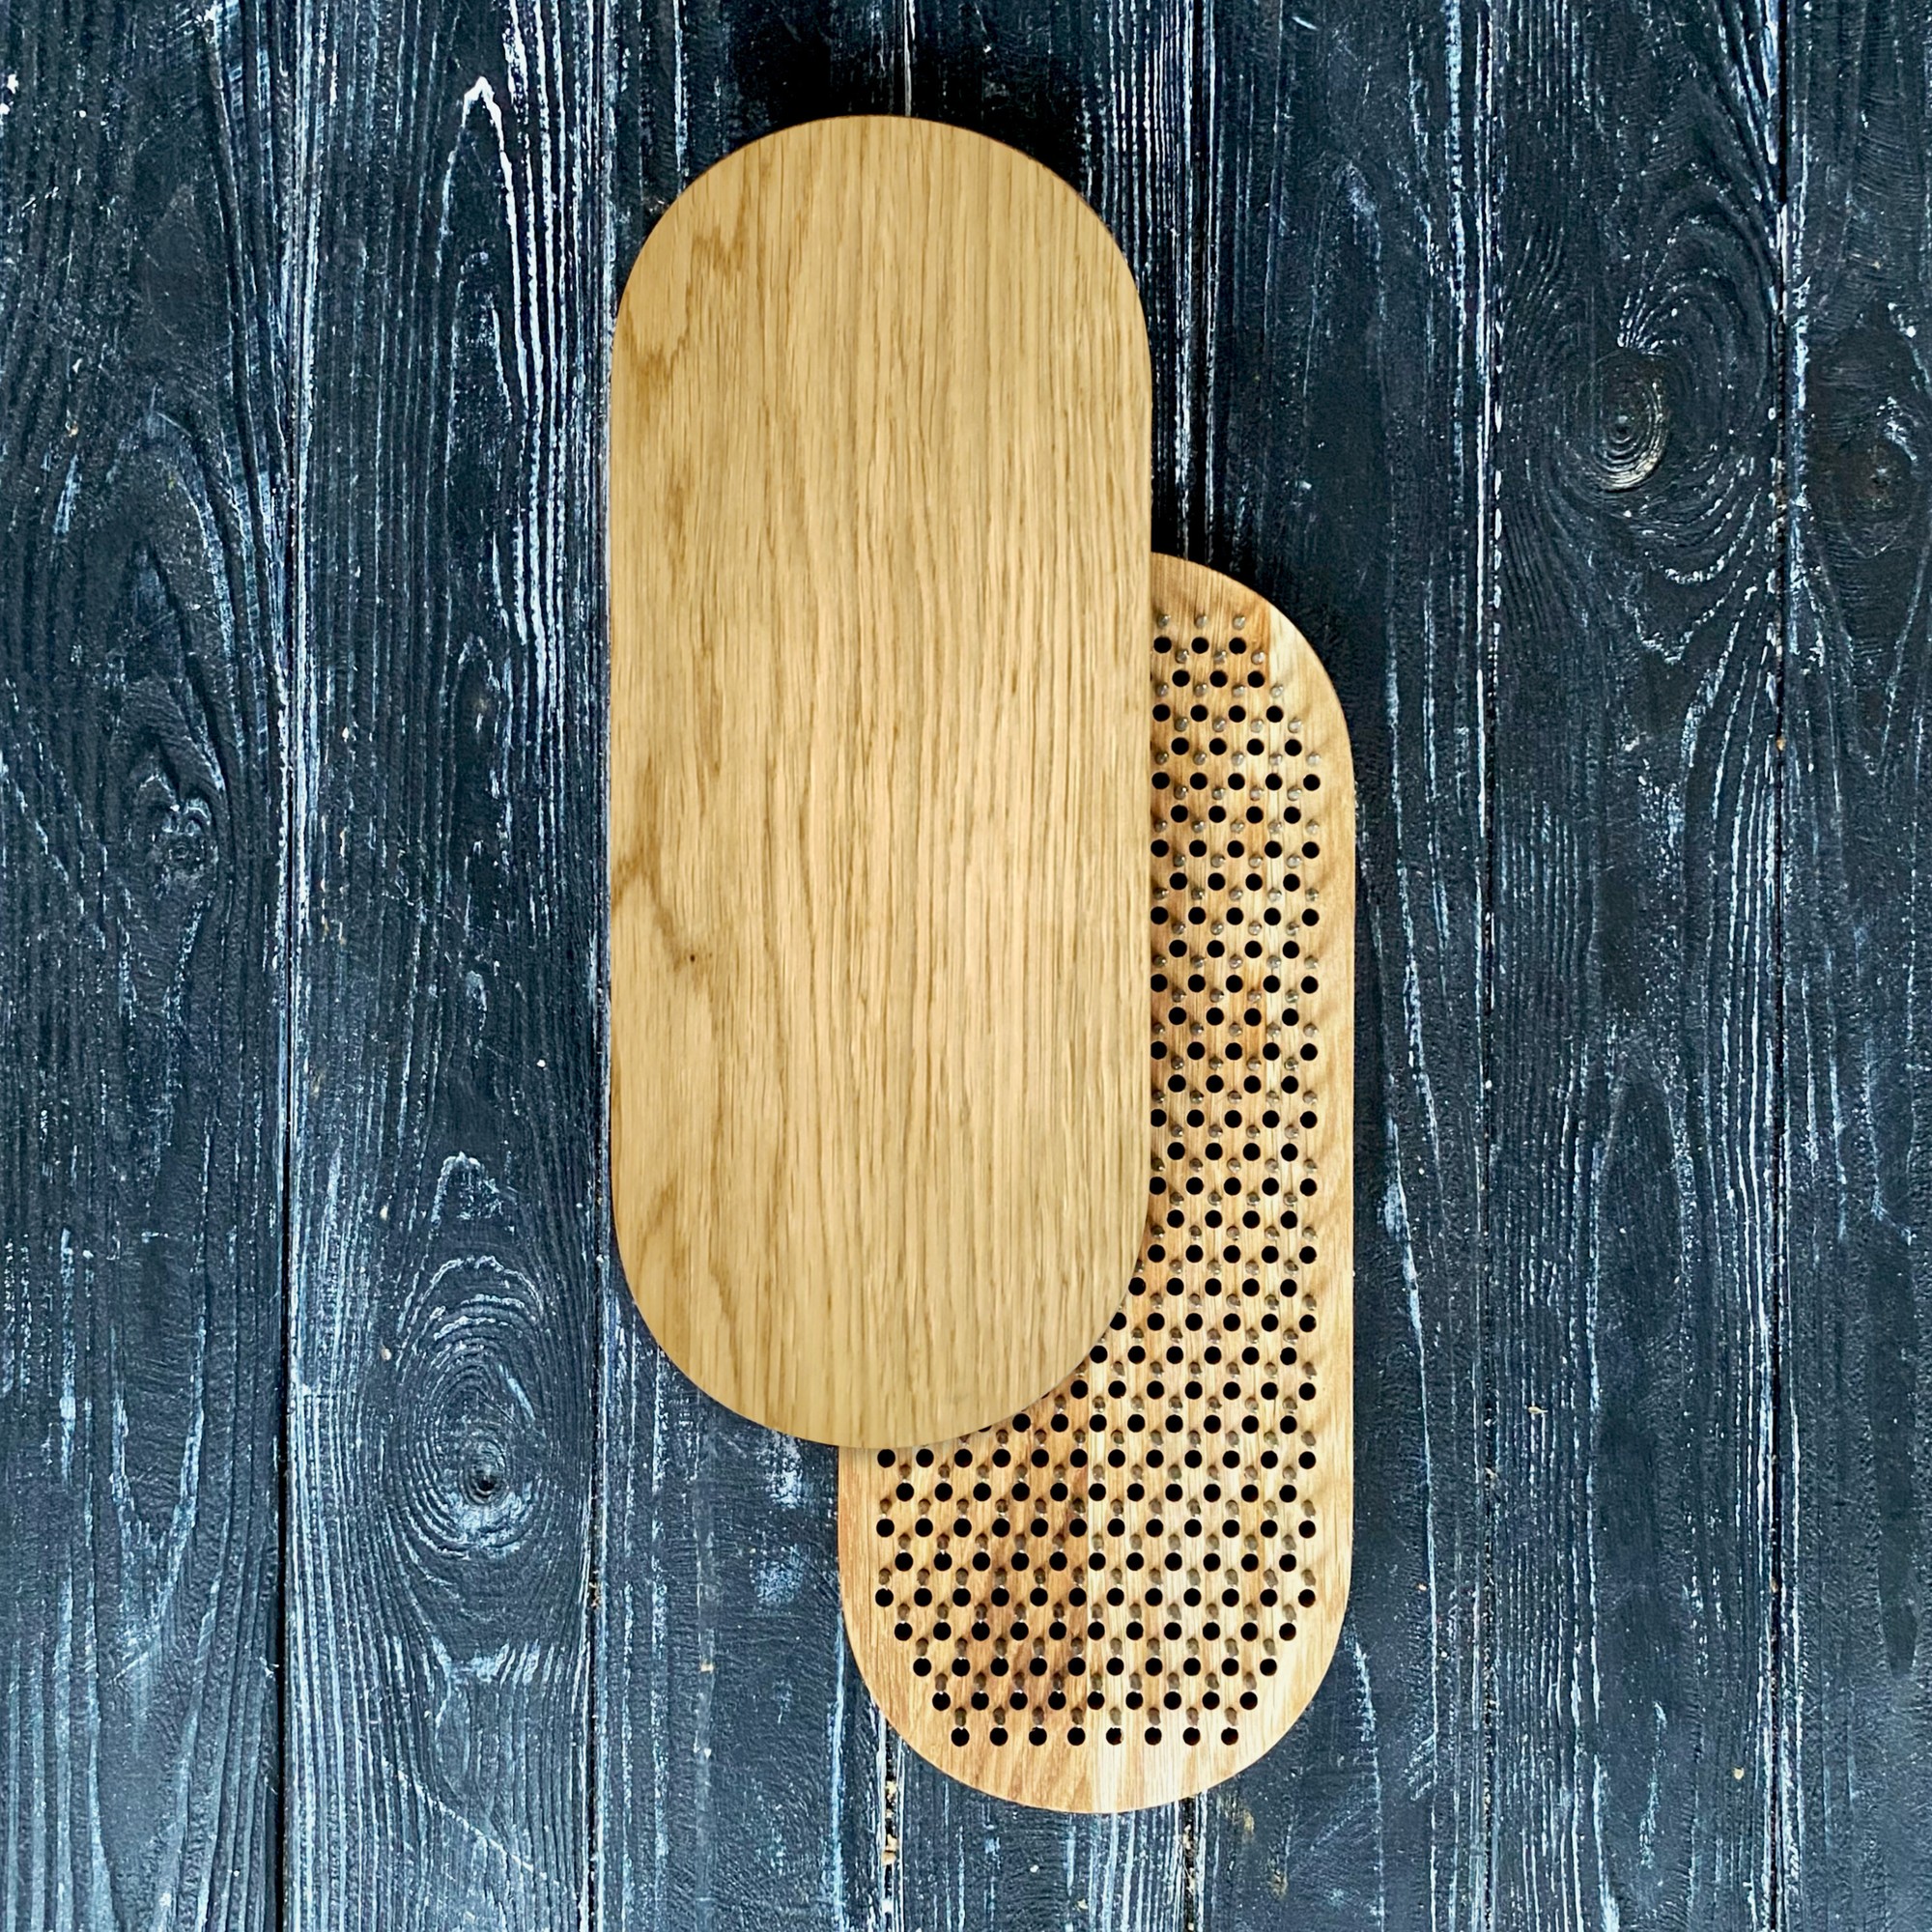 Oh! SADHU Board for Yoga from Natural Oak Wood, Oval Shape, Natural Wood